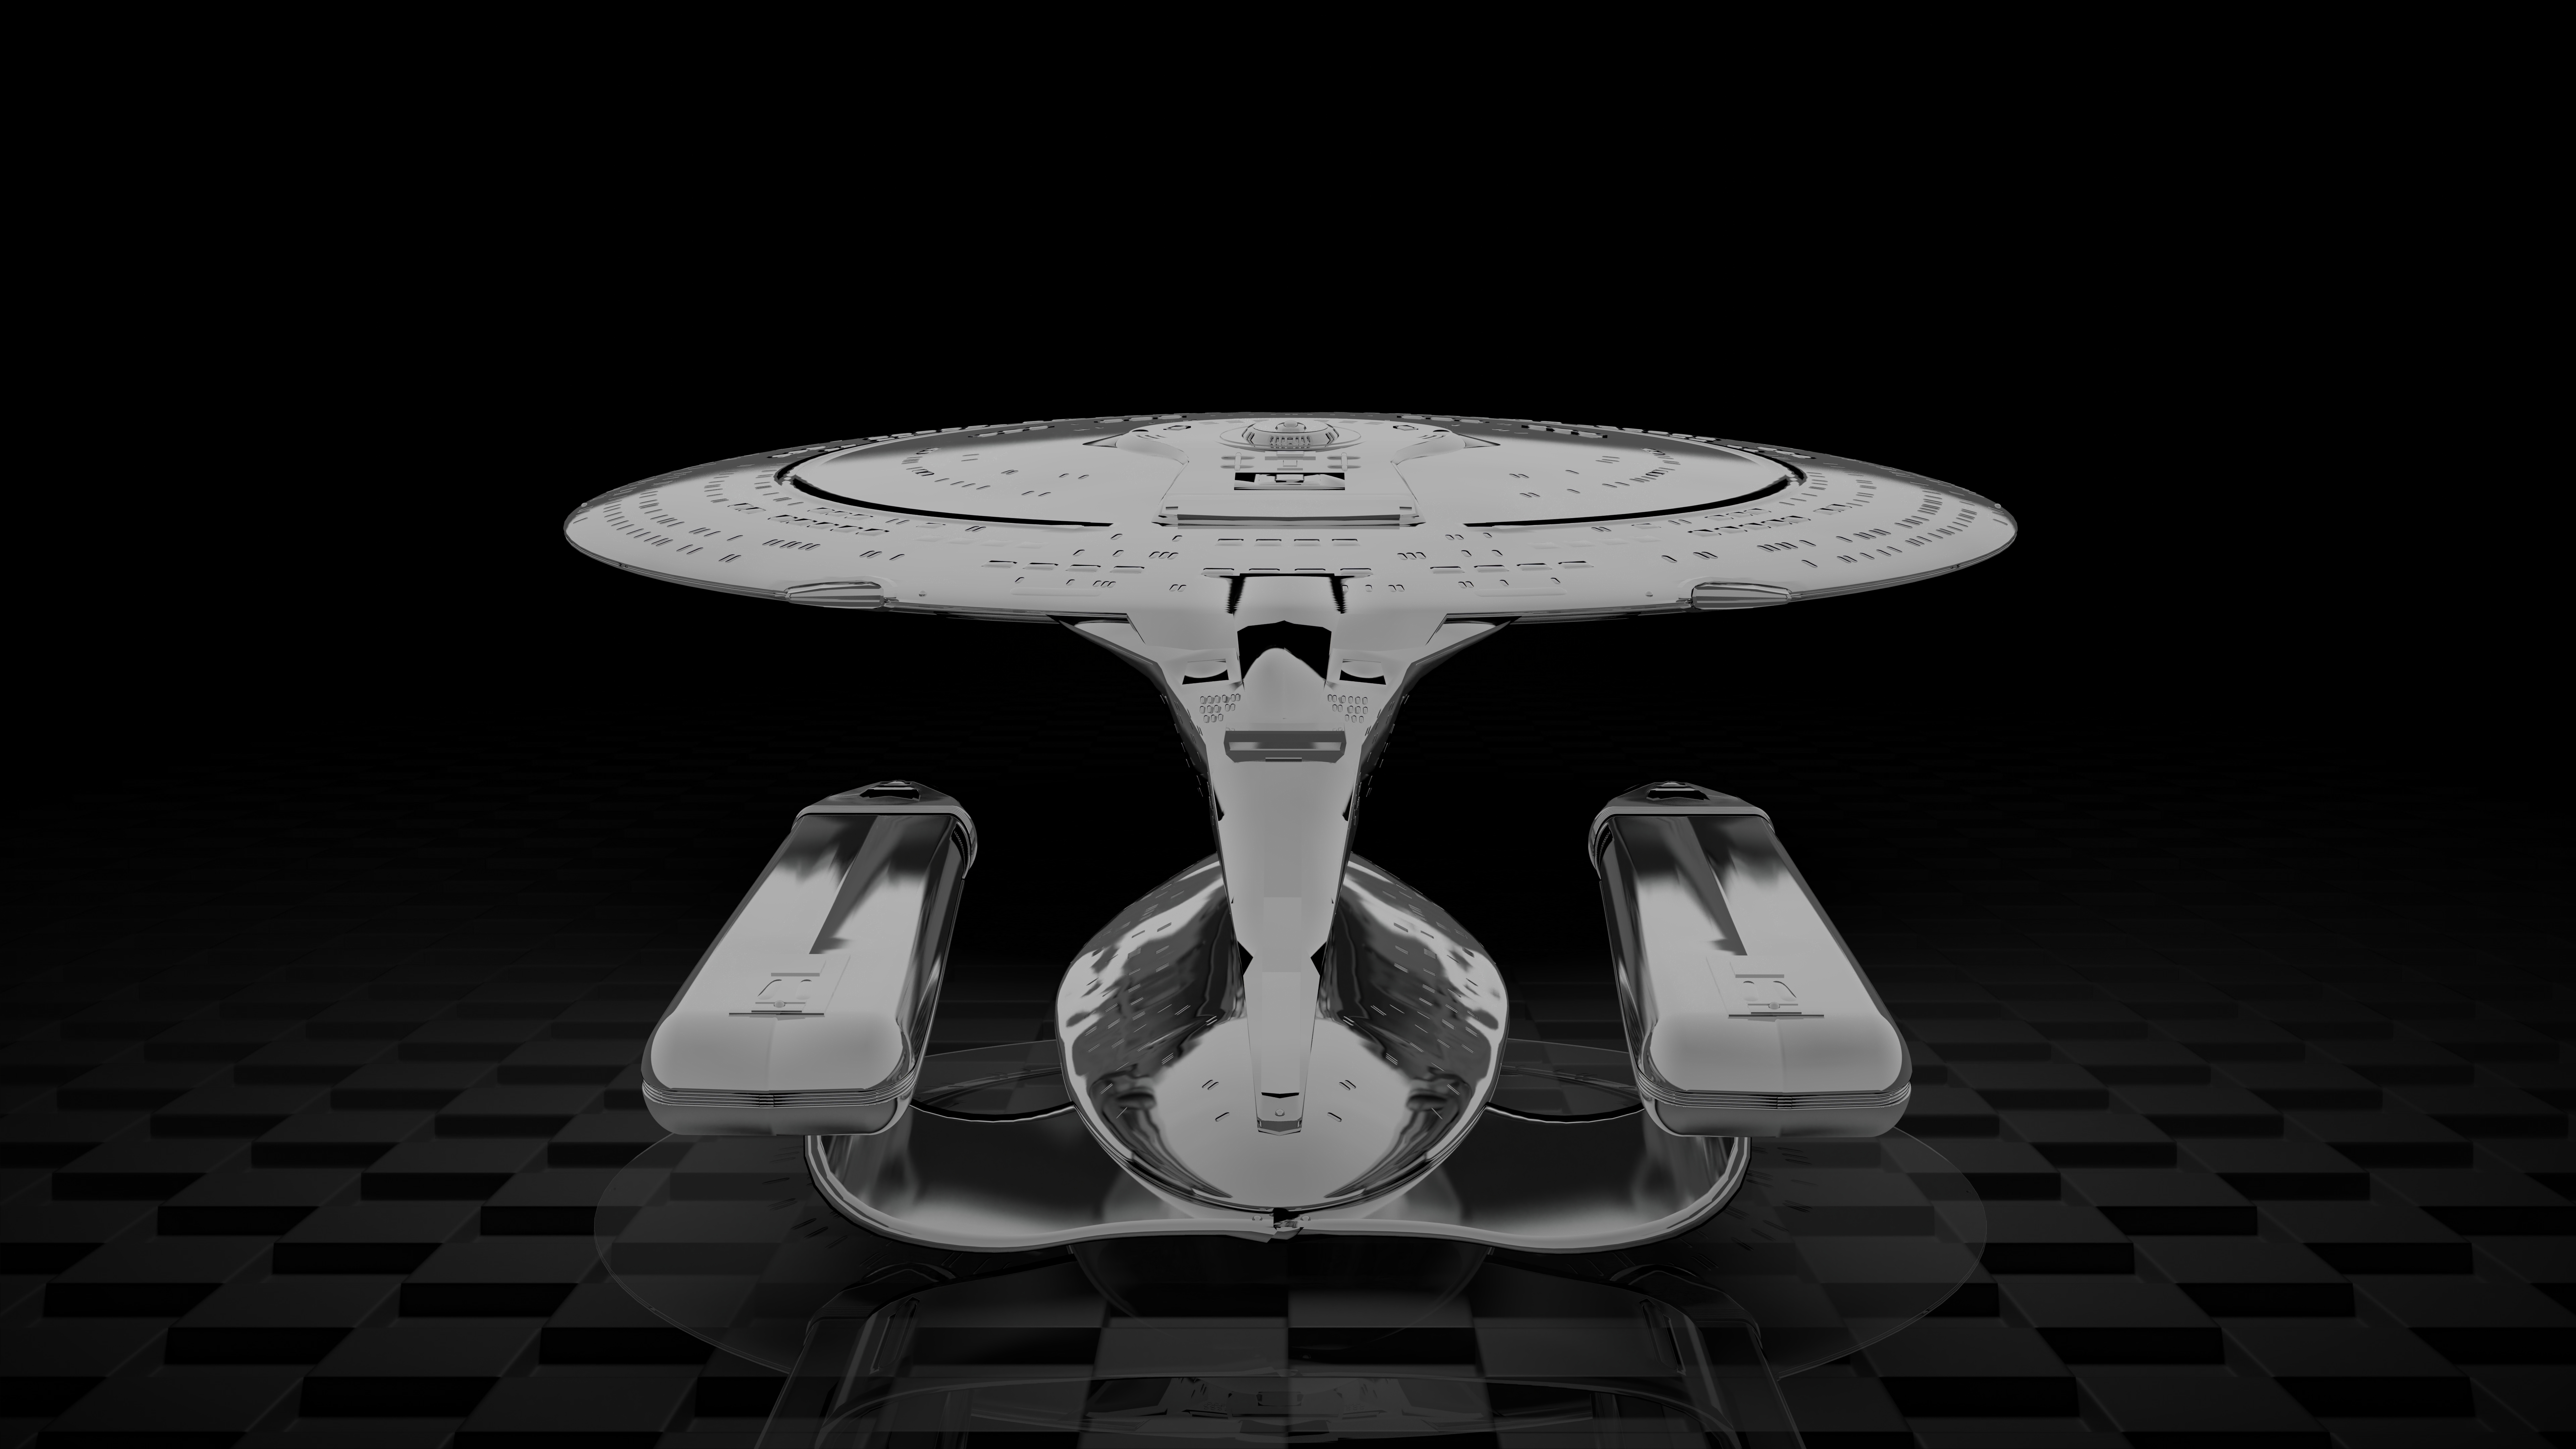 General 7680x4320 Star Trek Ships CGI Star Trek spaceship digital art reflection simple background technology minimalism checkered